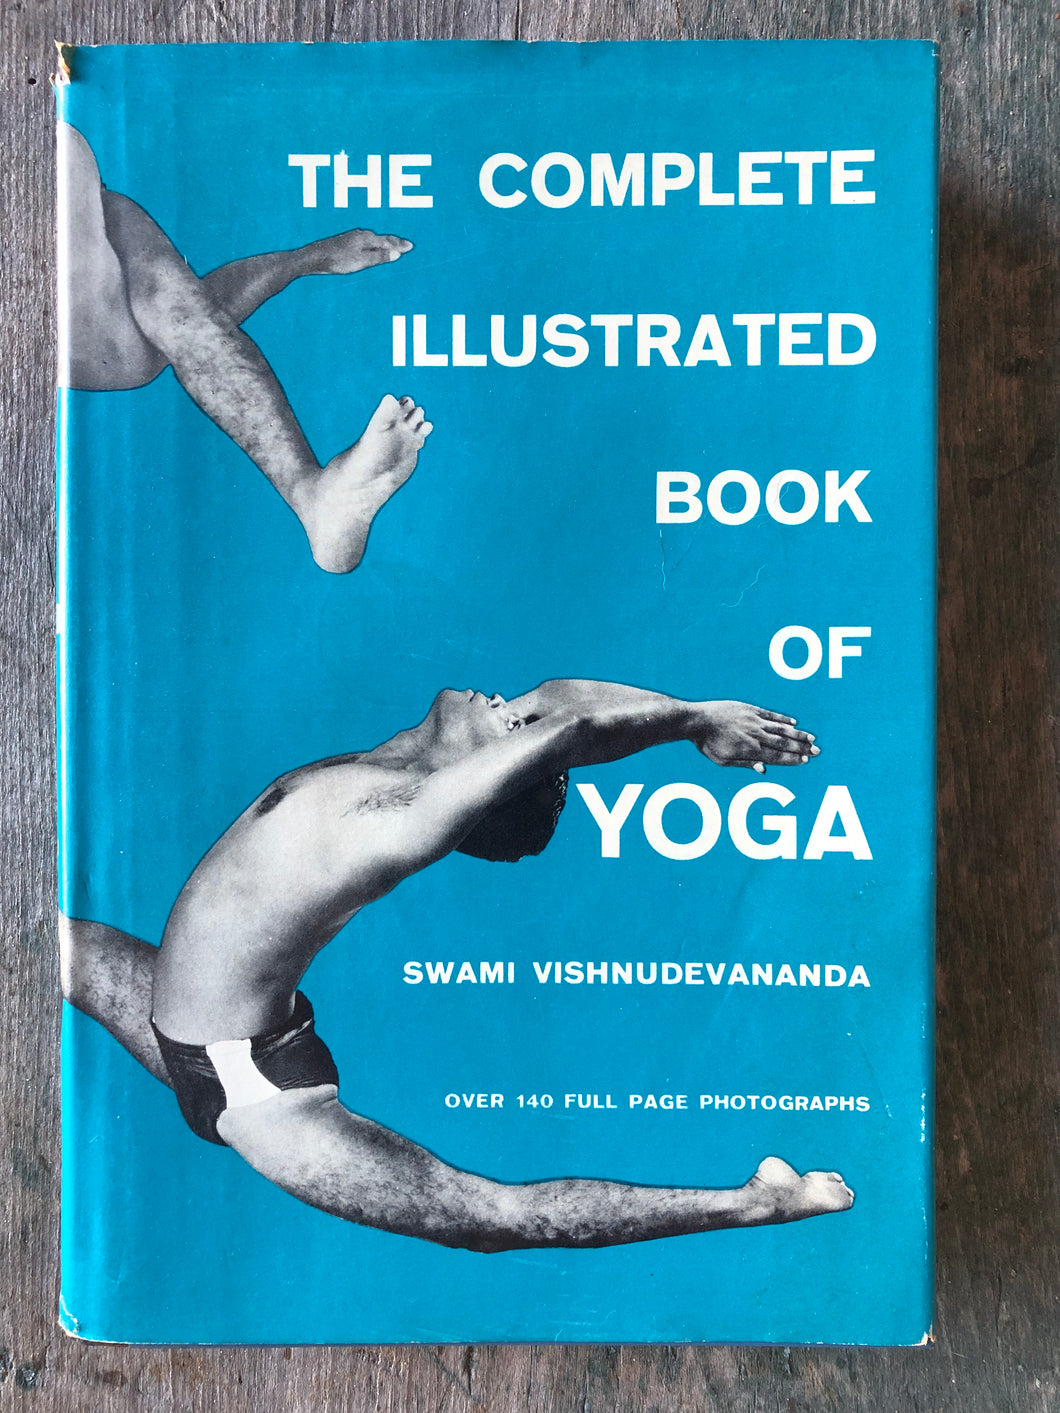 The Complete Illustrated Book of Yoga by Sami Vishnudevananda